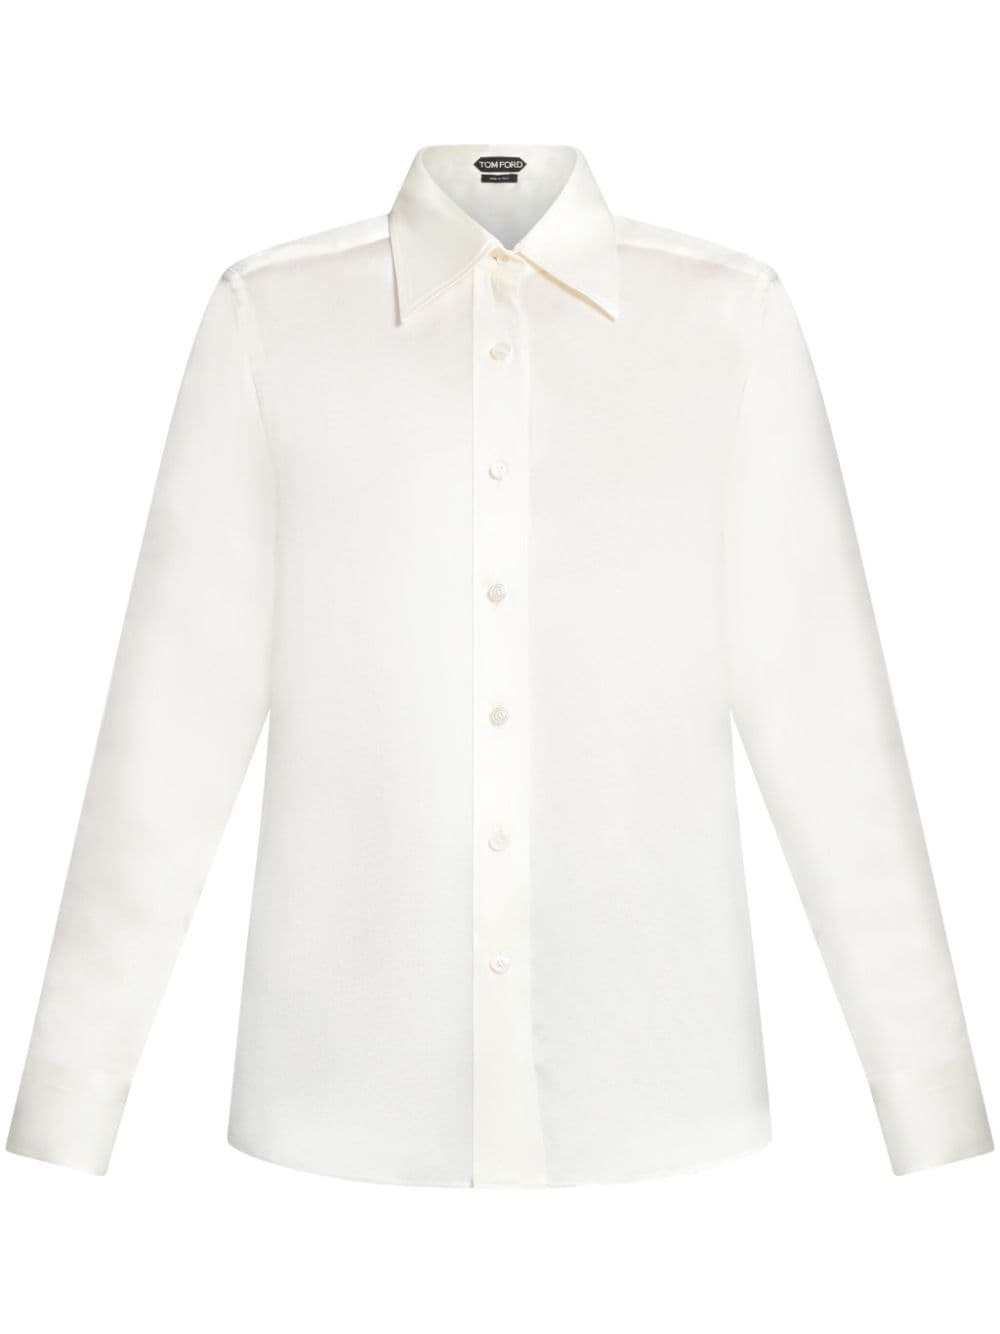 TOM FORD long-sleeve silk shirt - White von TOM FORD